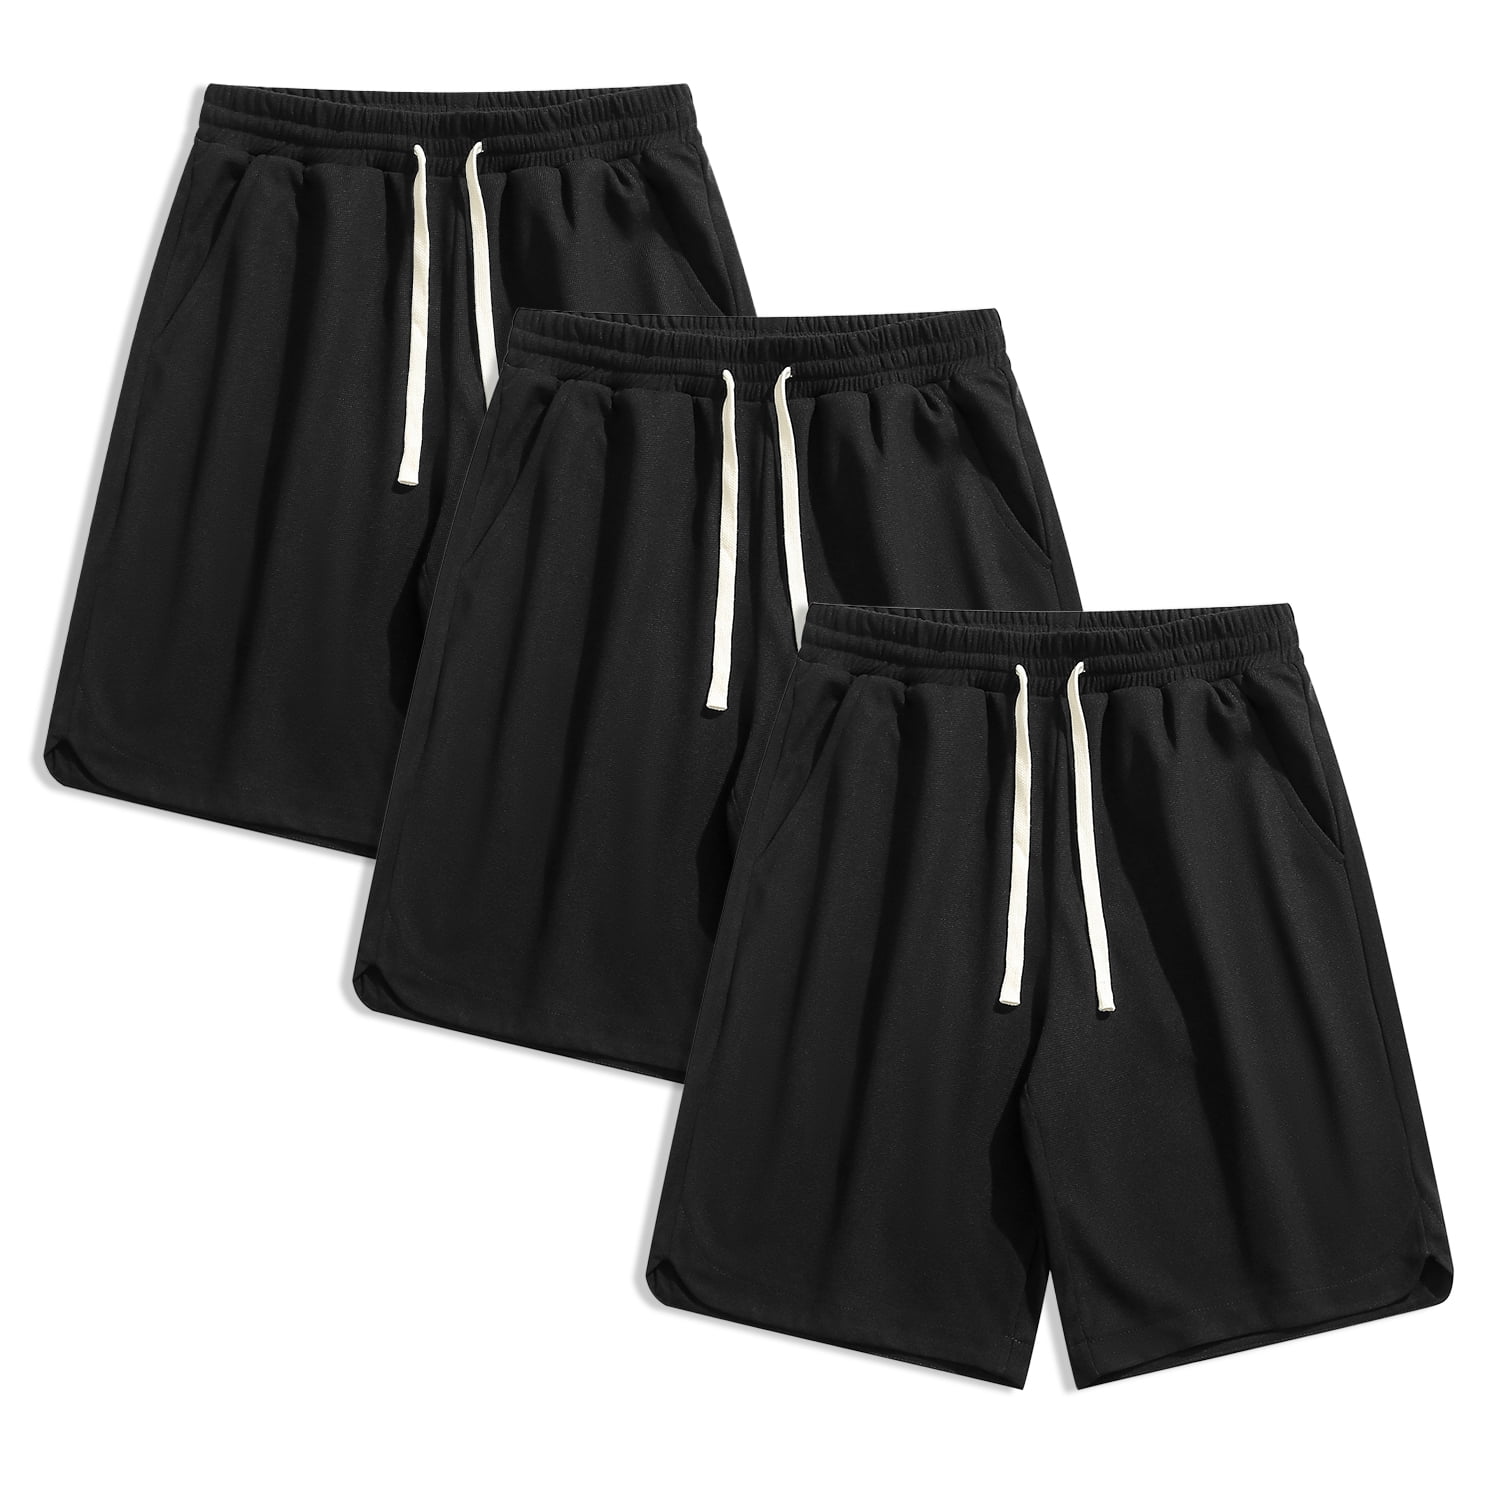 Vafful 3 Pack Men's Casual Shorts 9